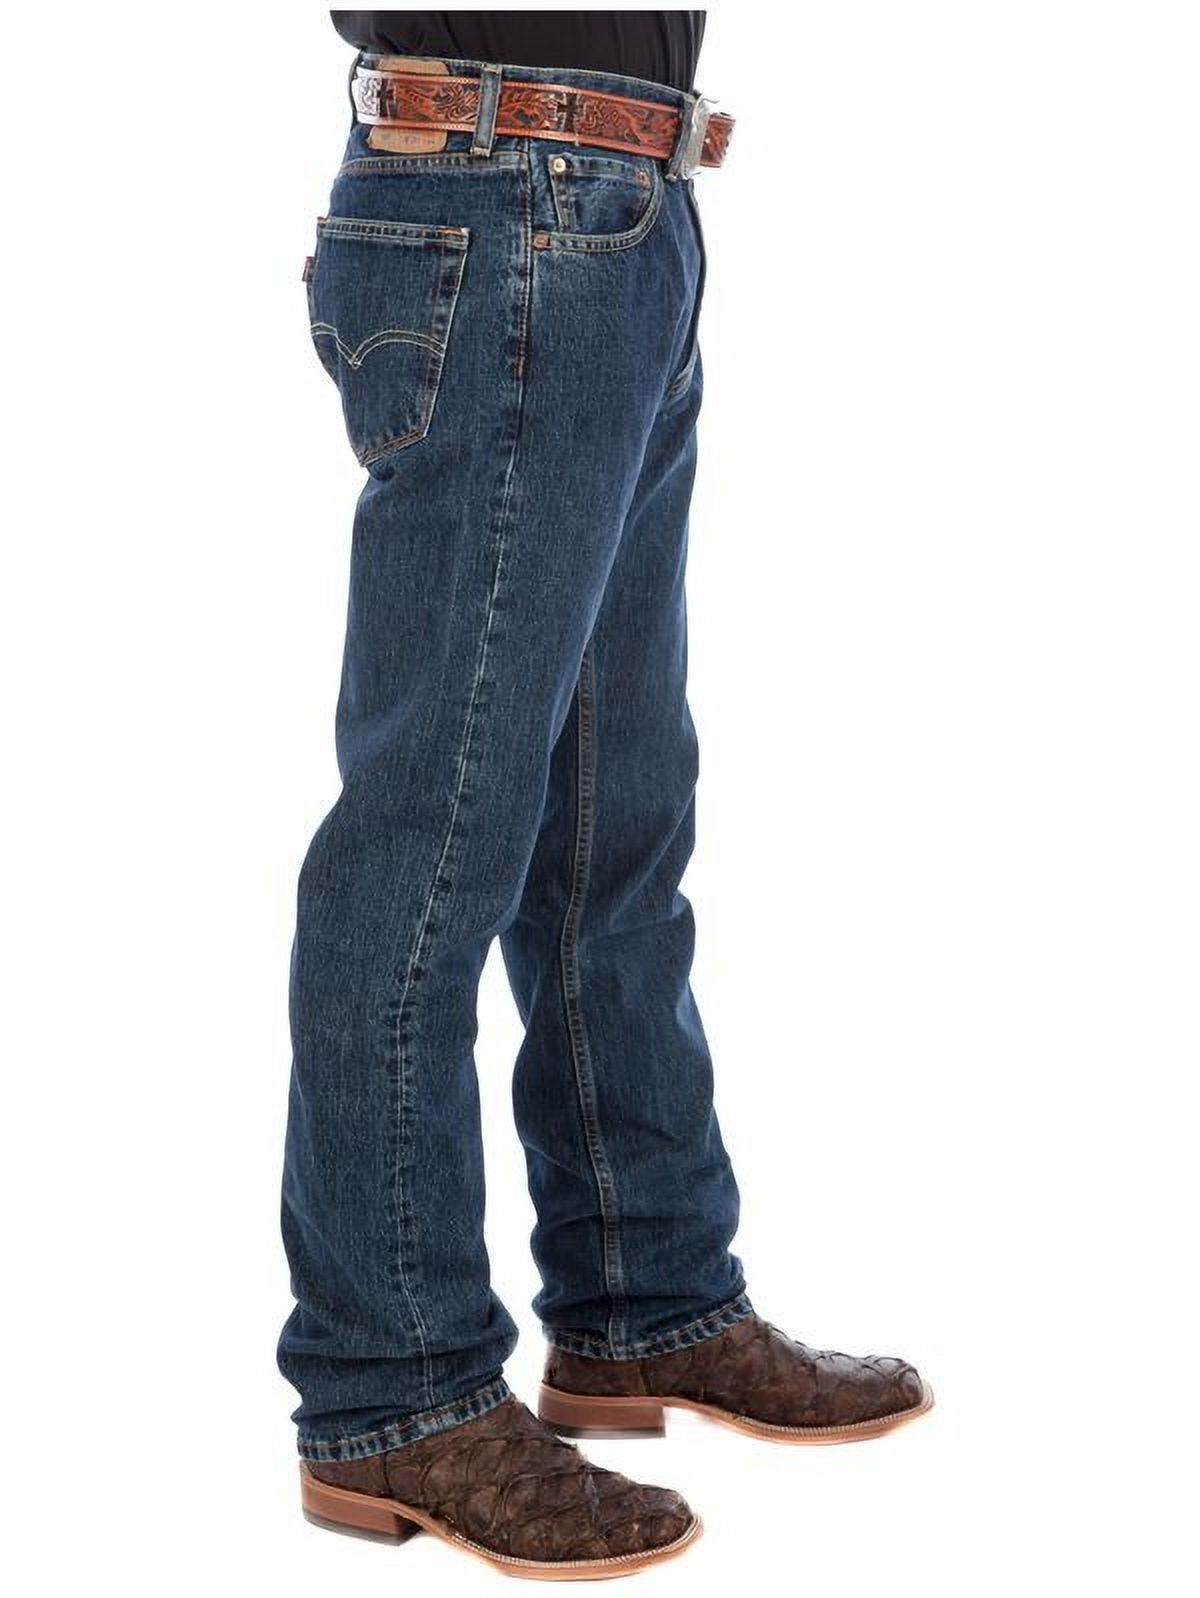 Levi's Men's 505 Regular Fit Jeans - image 4 of 5